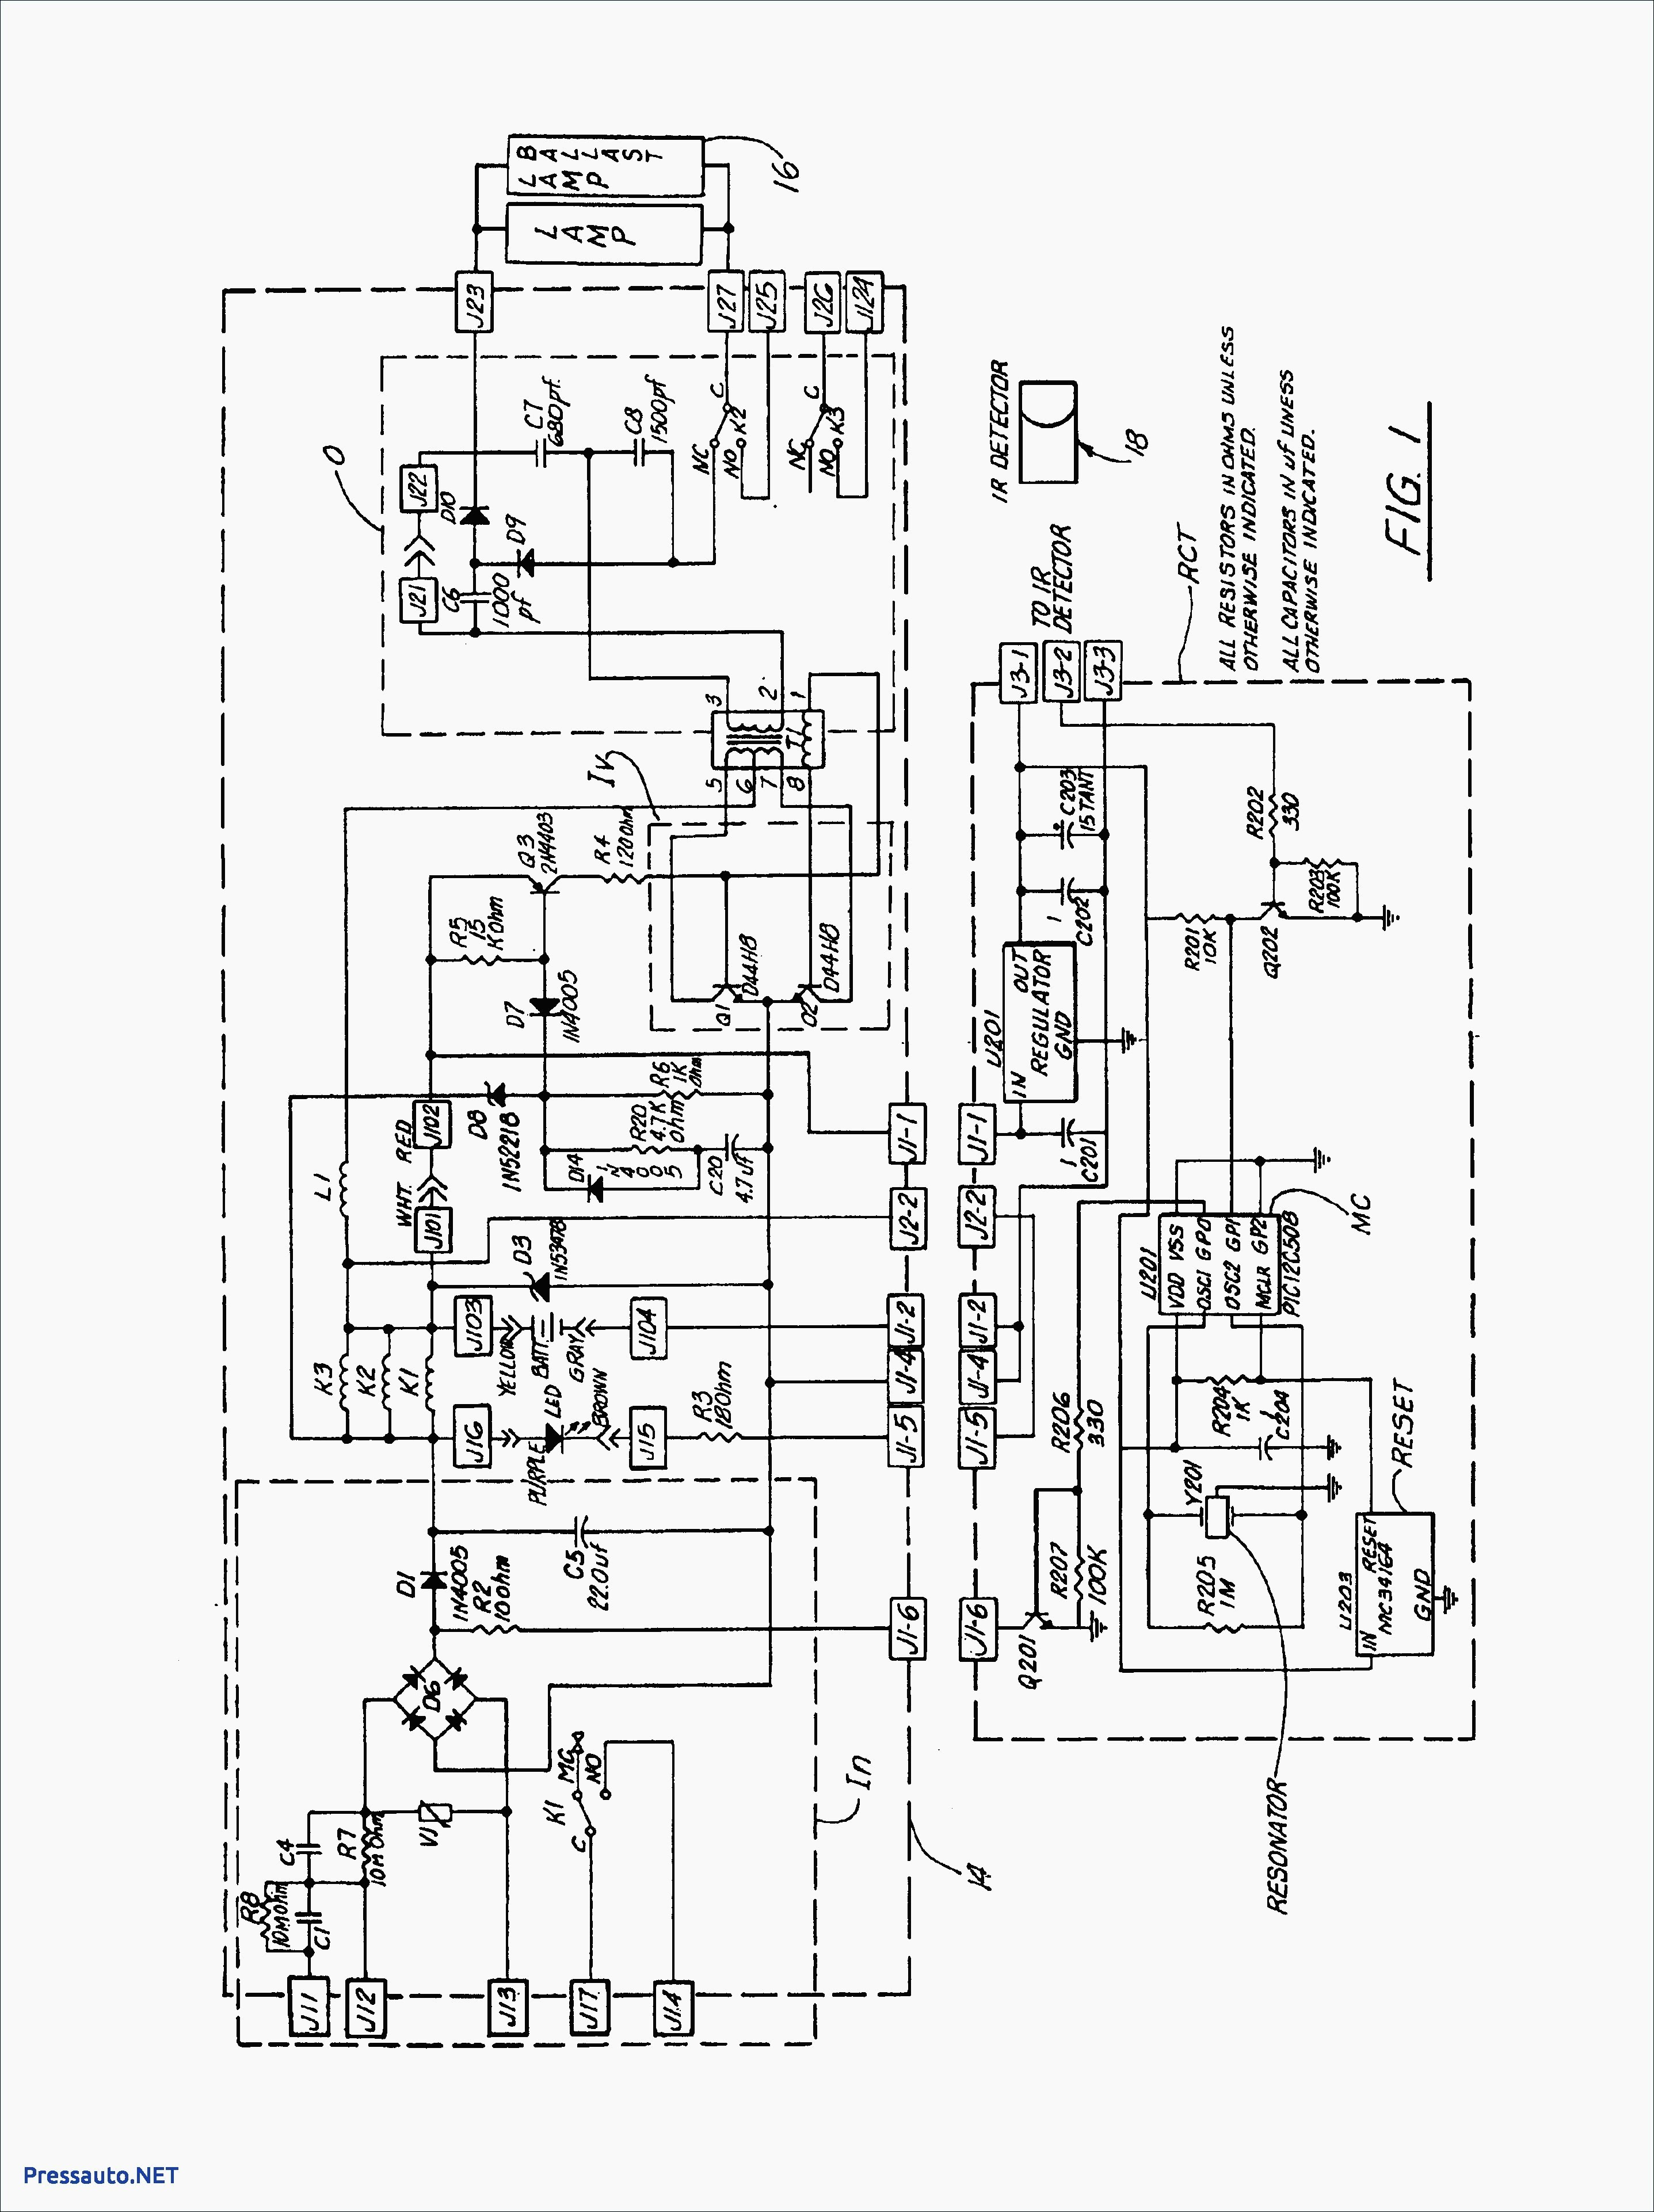 347 Volt Hid Ballast Wiring Diagram - Wiring Diagram Networks